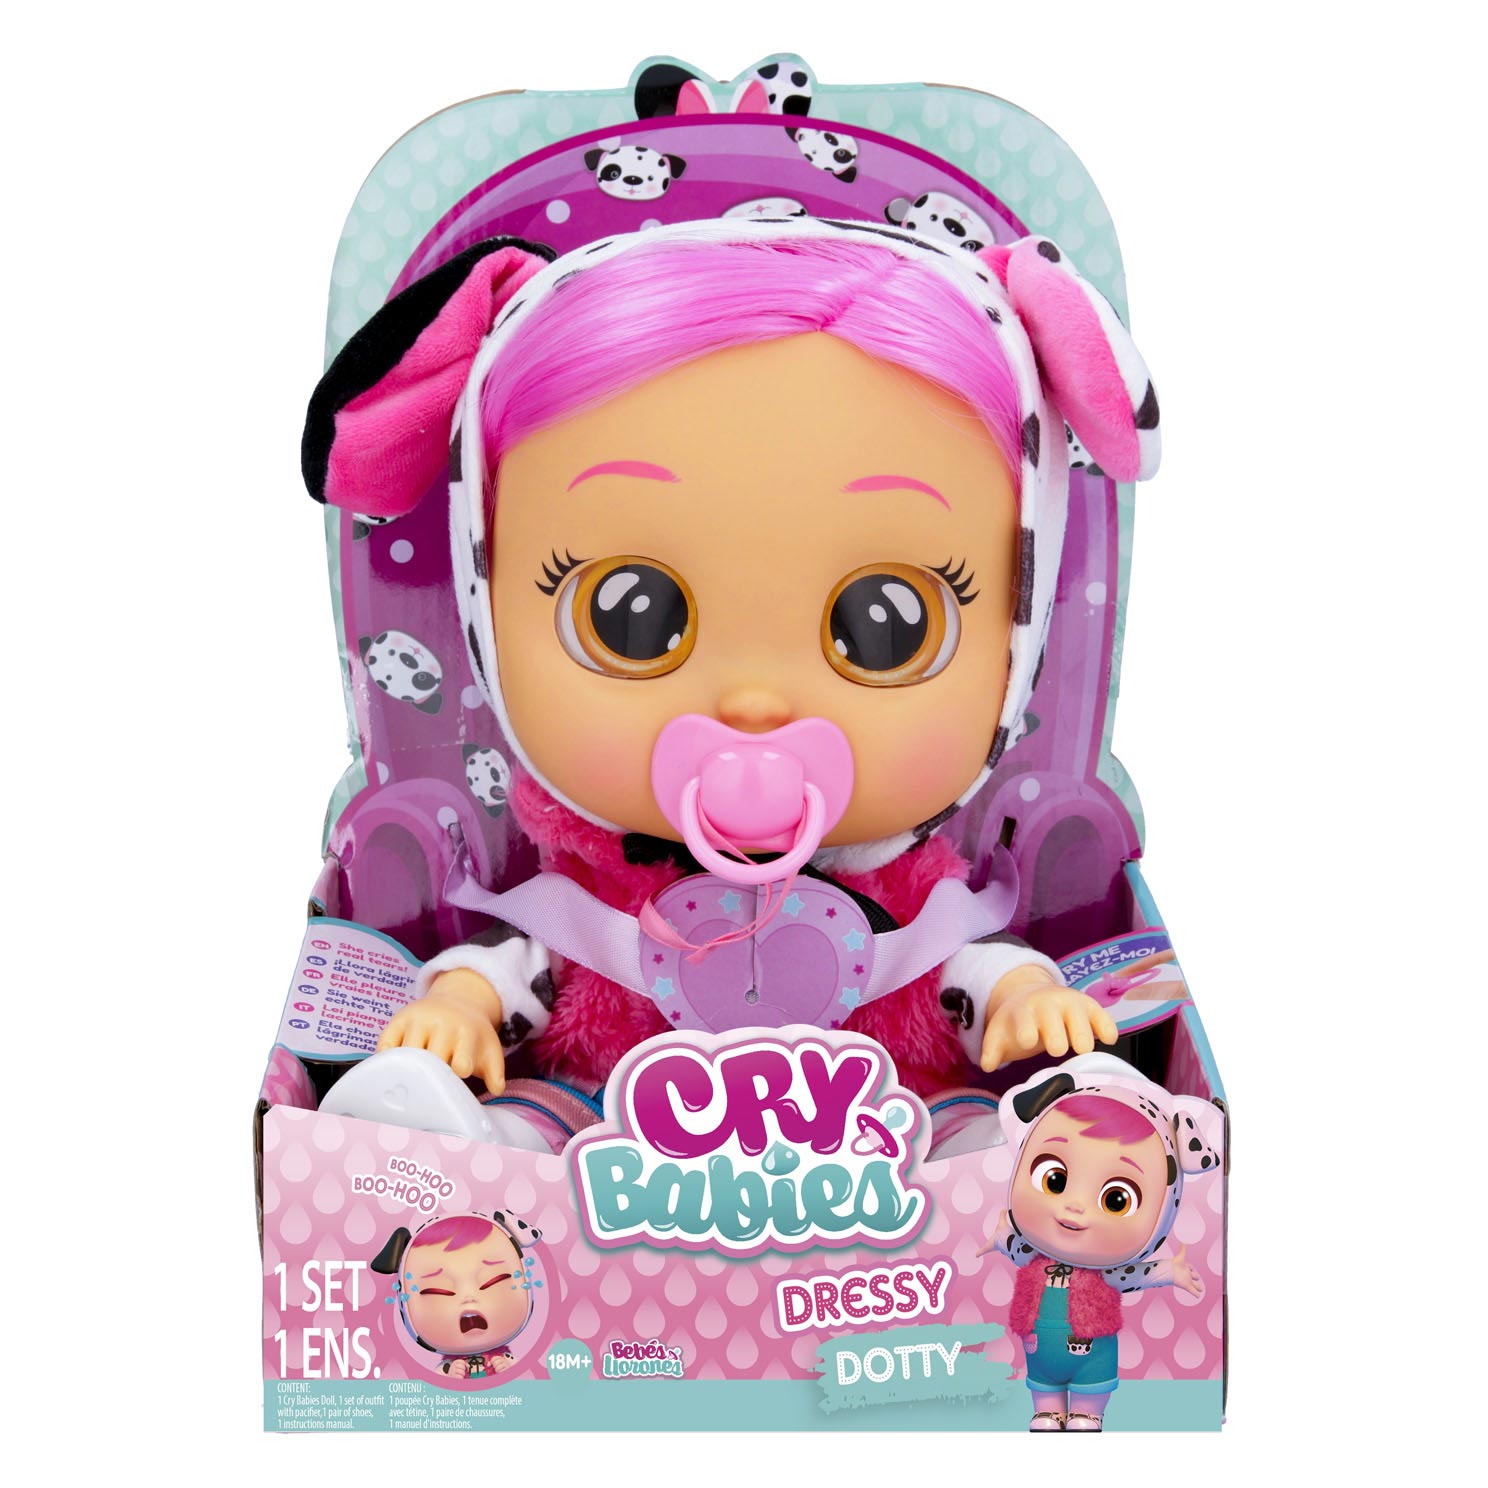 Cry Babies Dressy Dotty Weinende Puppe